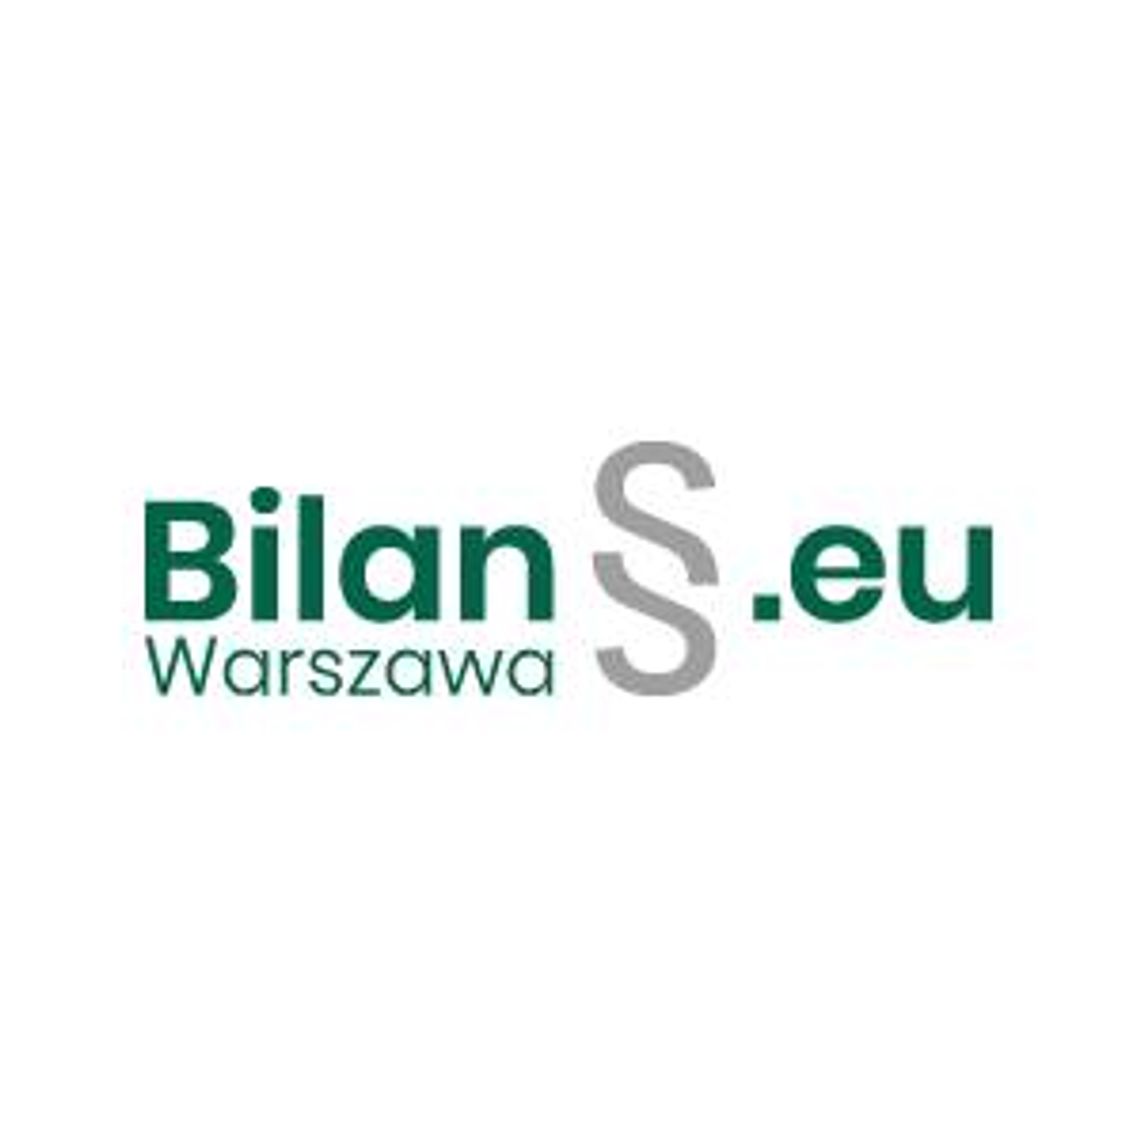 Usługi prawne - Bilans.eu